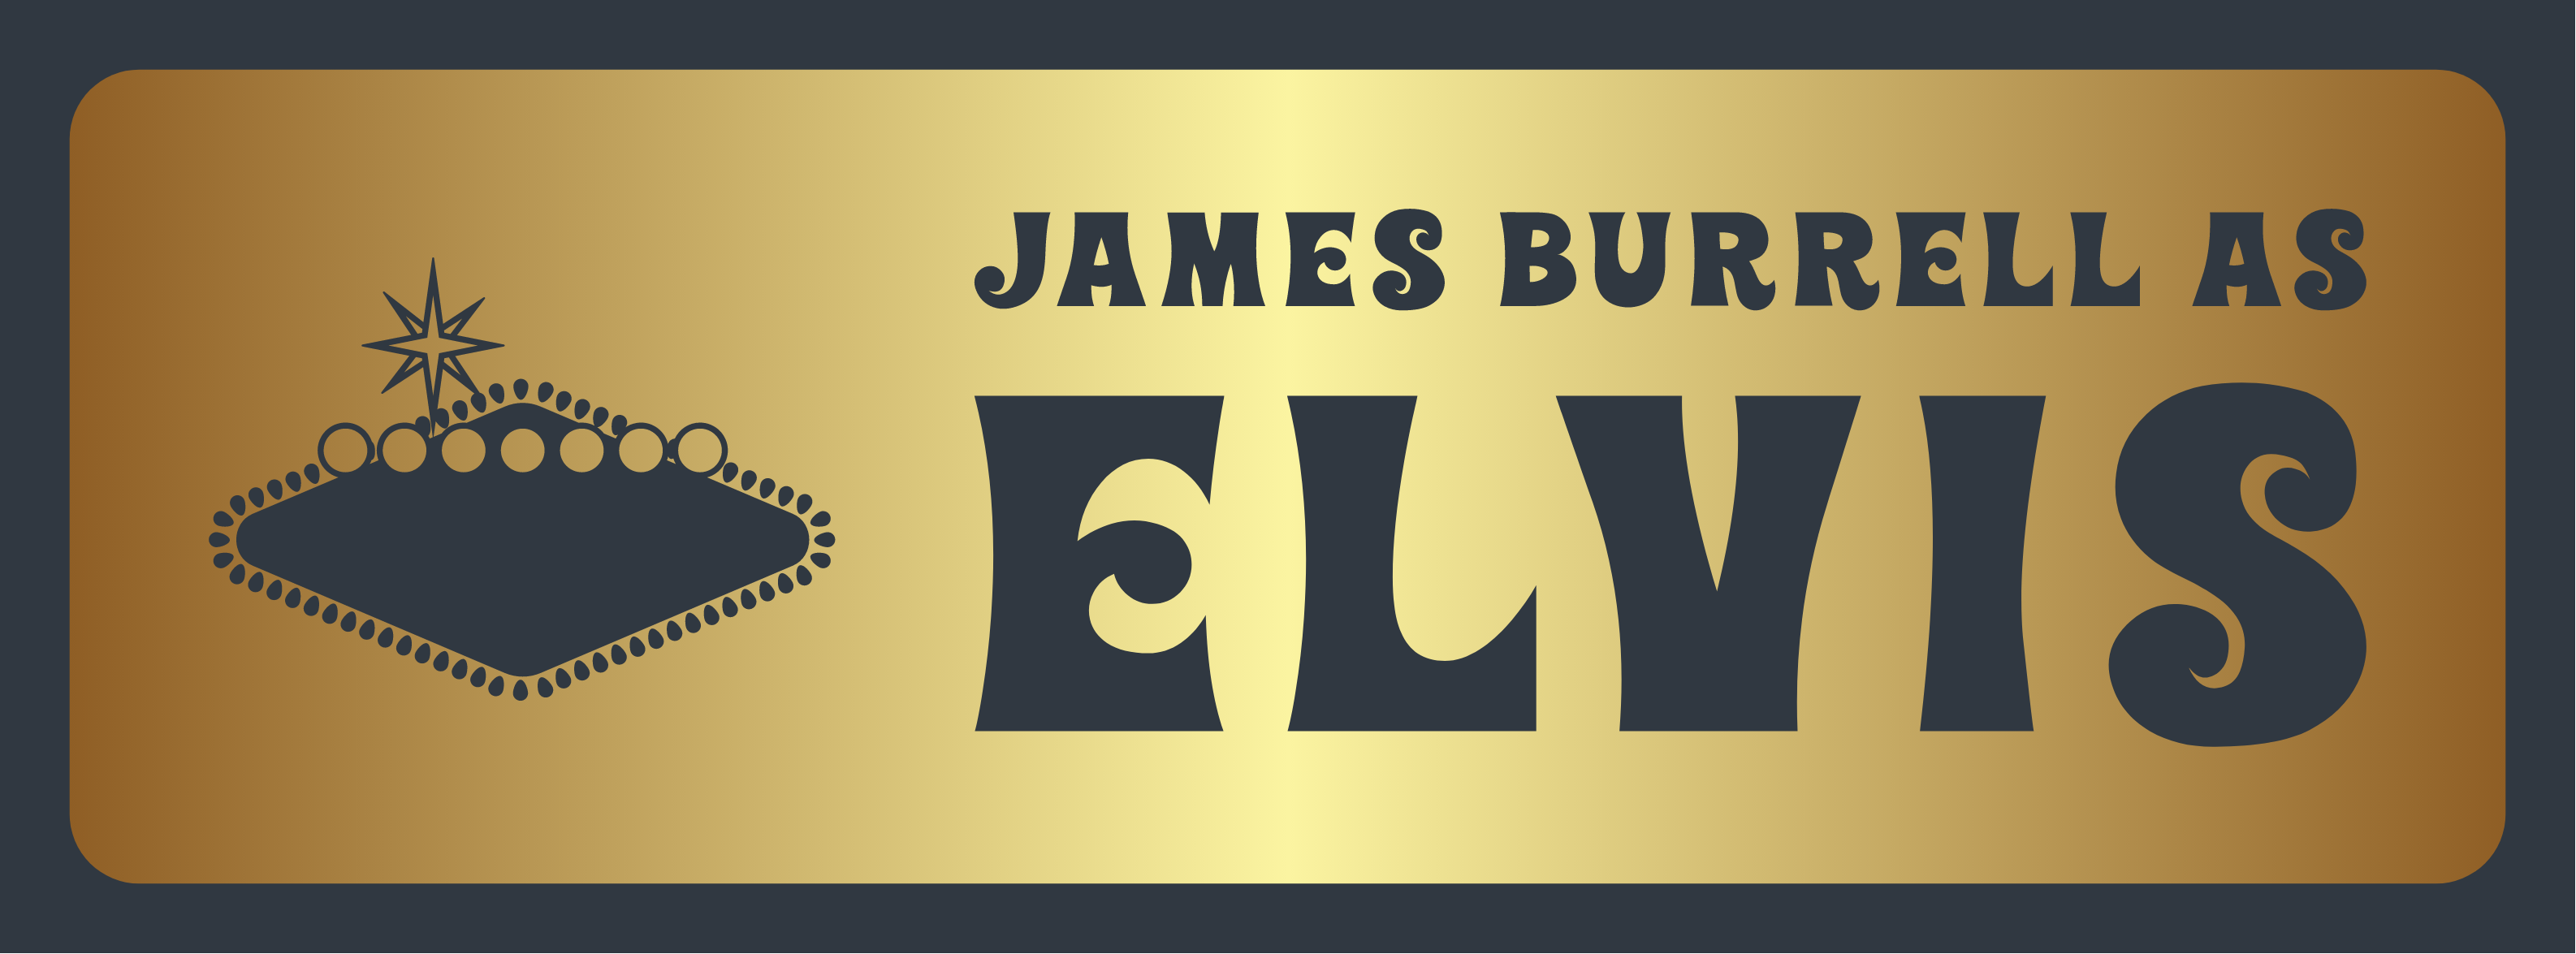 James Burrell as Elvis